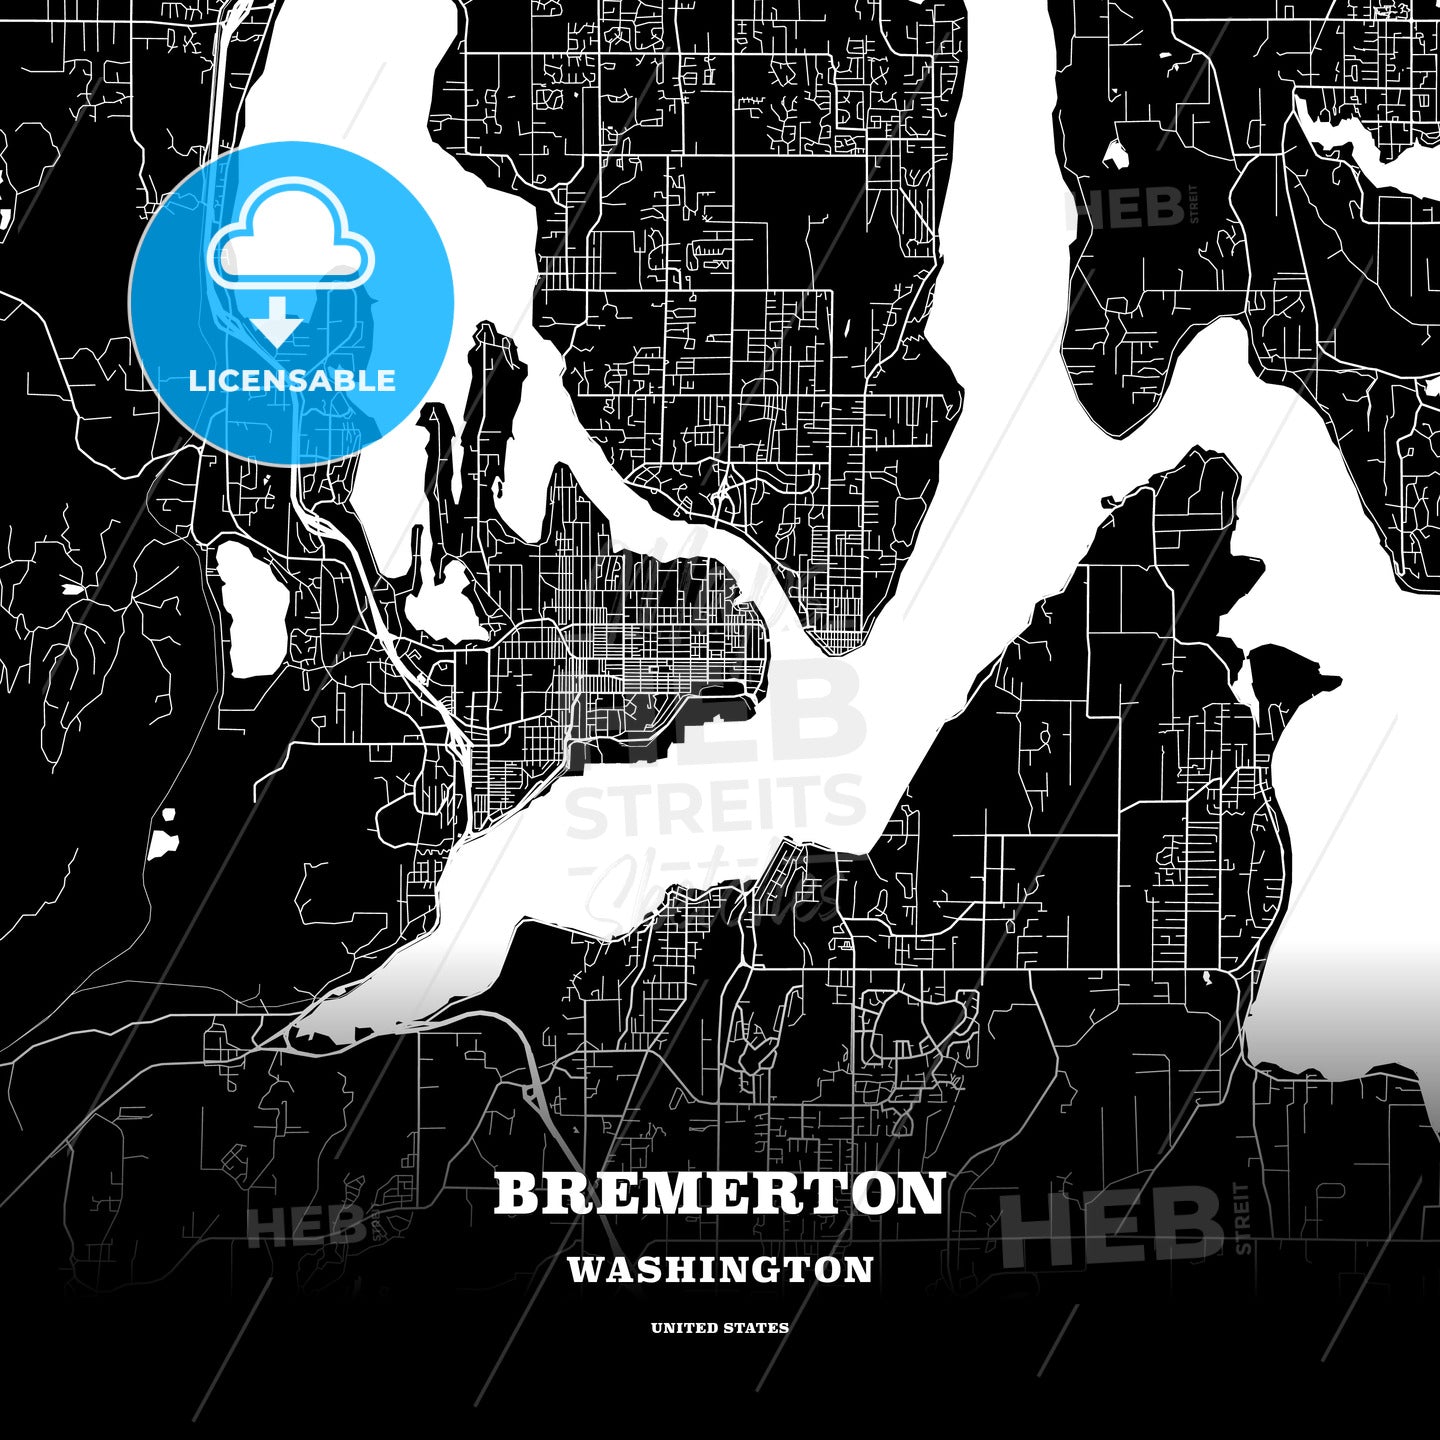 Bremerton, Washington, USA map